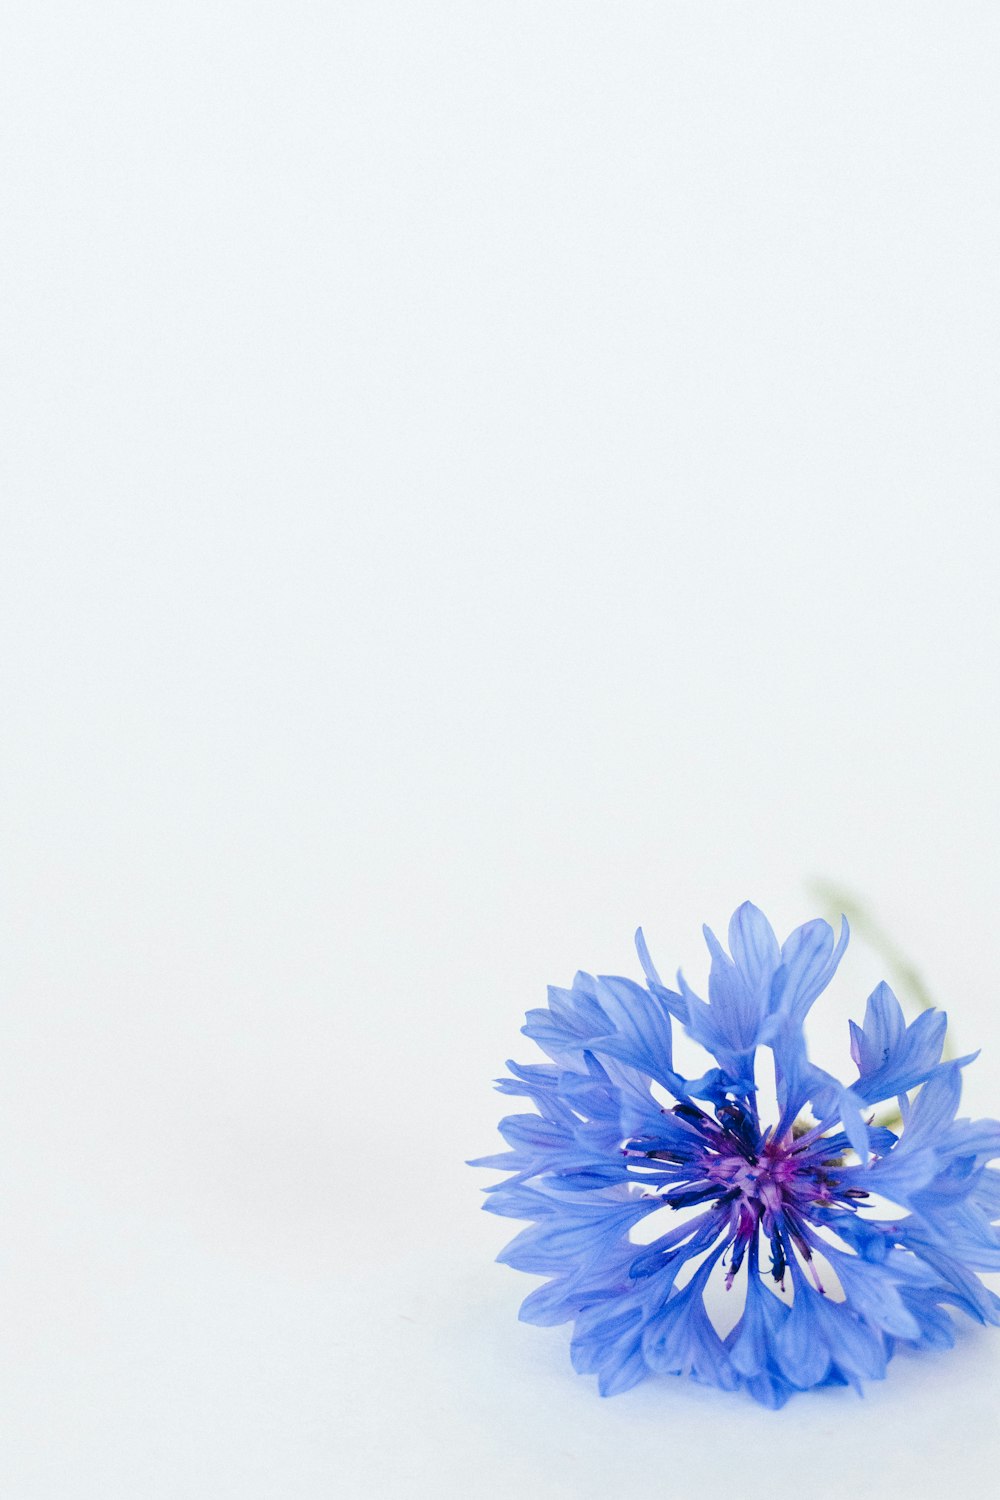 flor azul no fundo branco